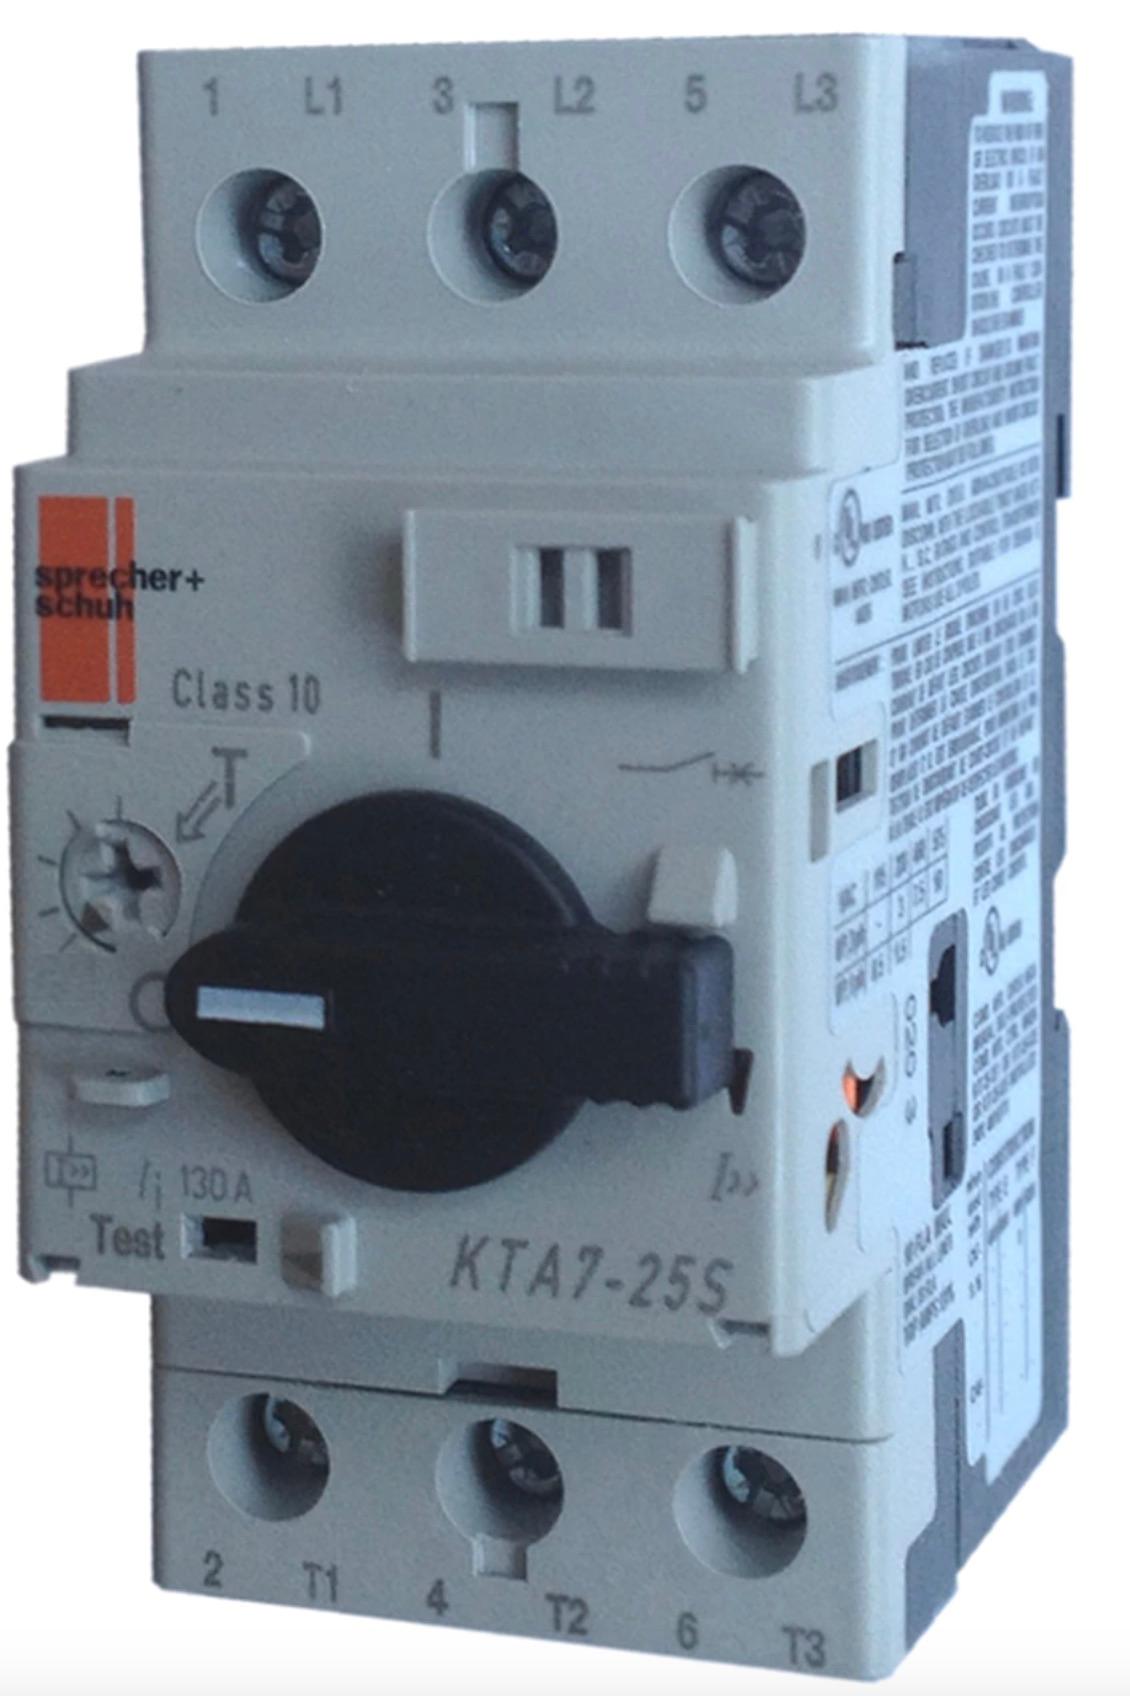 Sprecher + Schuh KTA7-25S-1.6A Manual motor controller, 21 Amps, 1.0...1.6 A Current Adjustment Range , Standard Interrupting Capacity